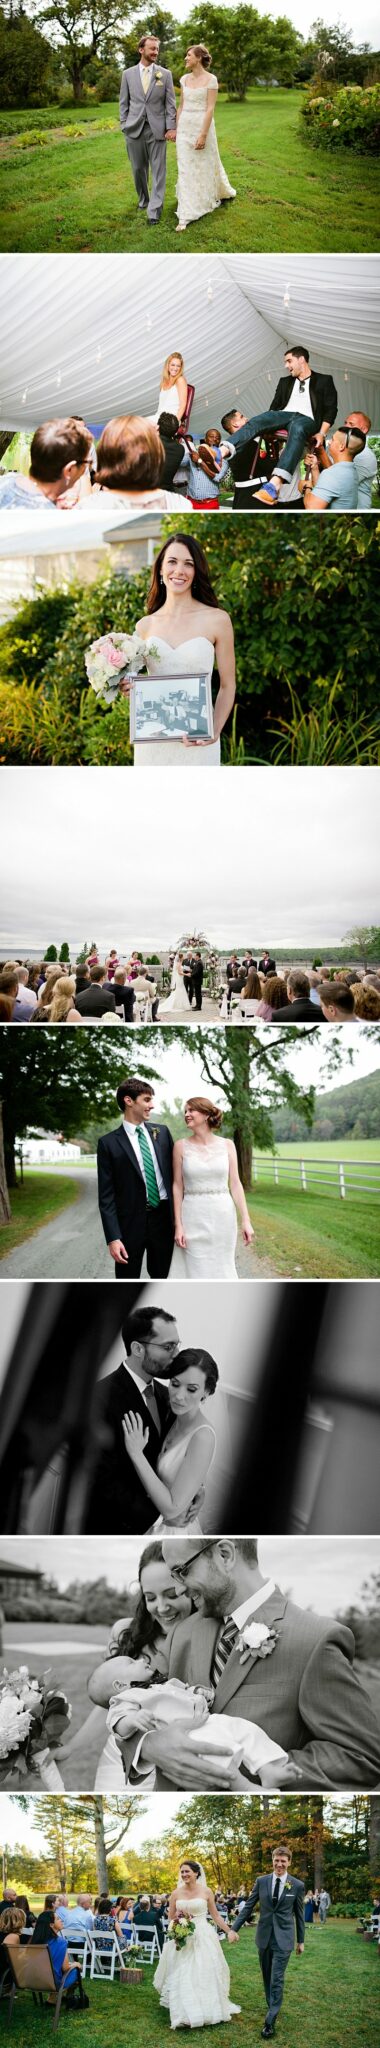 Maine-wedding-photographer-best-wedding-photos-of-2014-0031